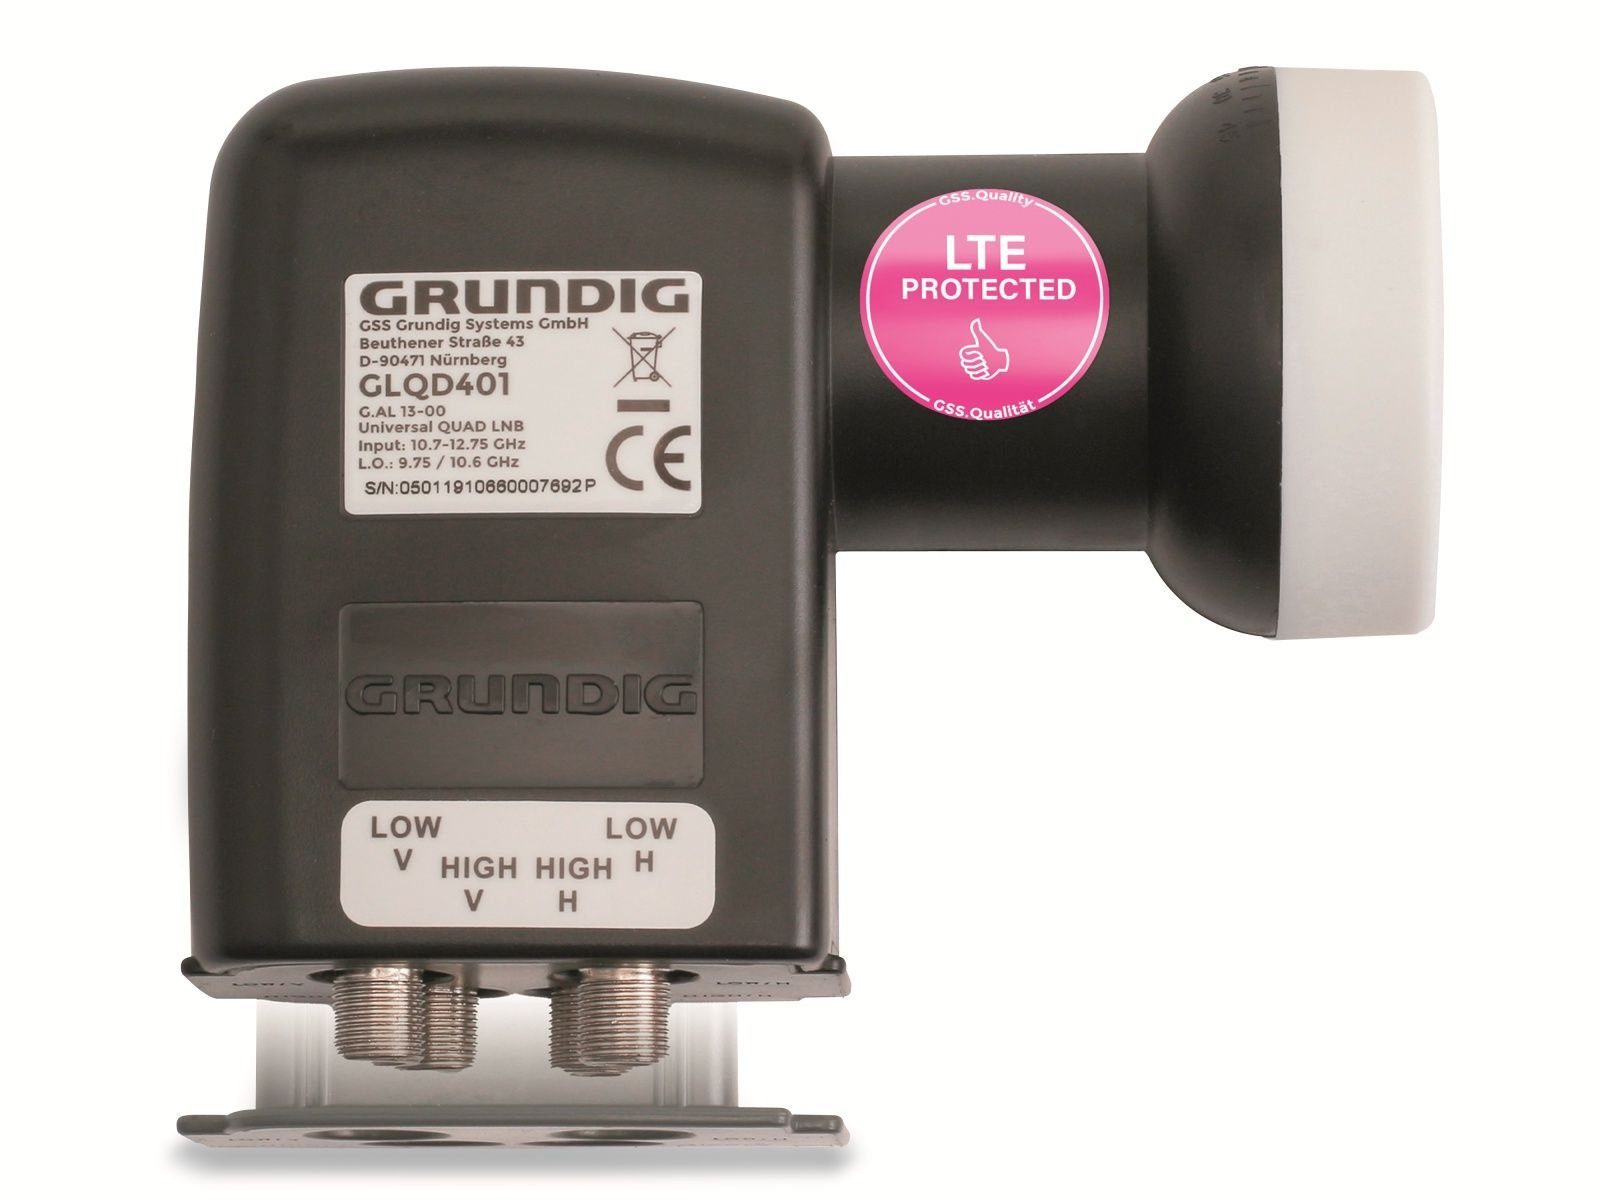 Grundig GRUNDIG Quad-LNB GLQD401 Universal-Quad-LNB